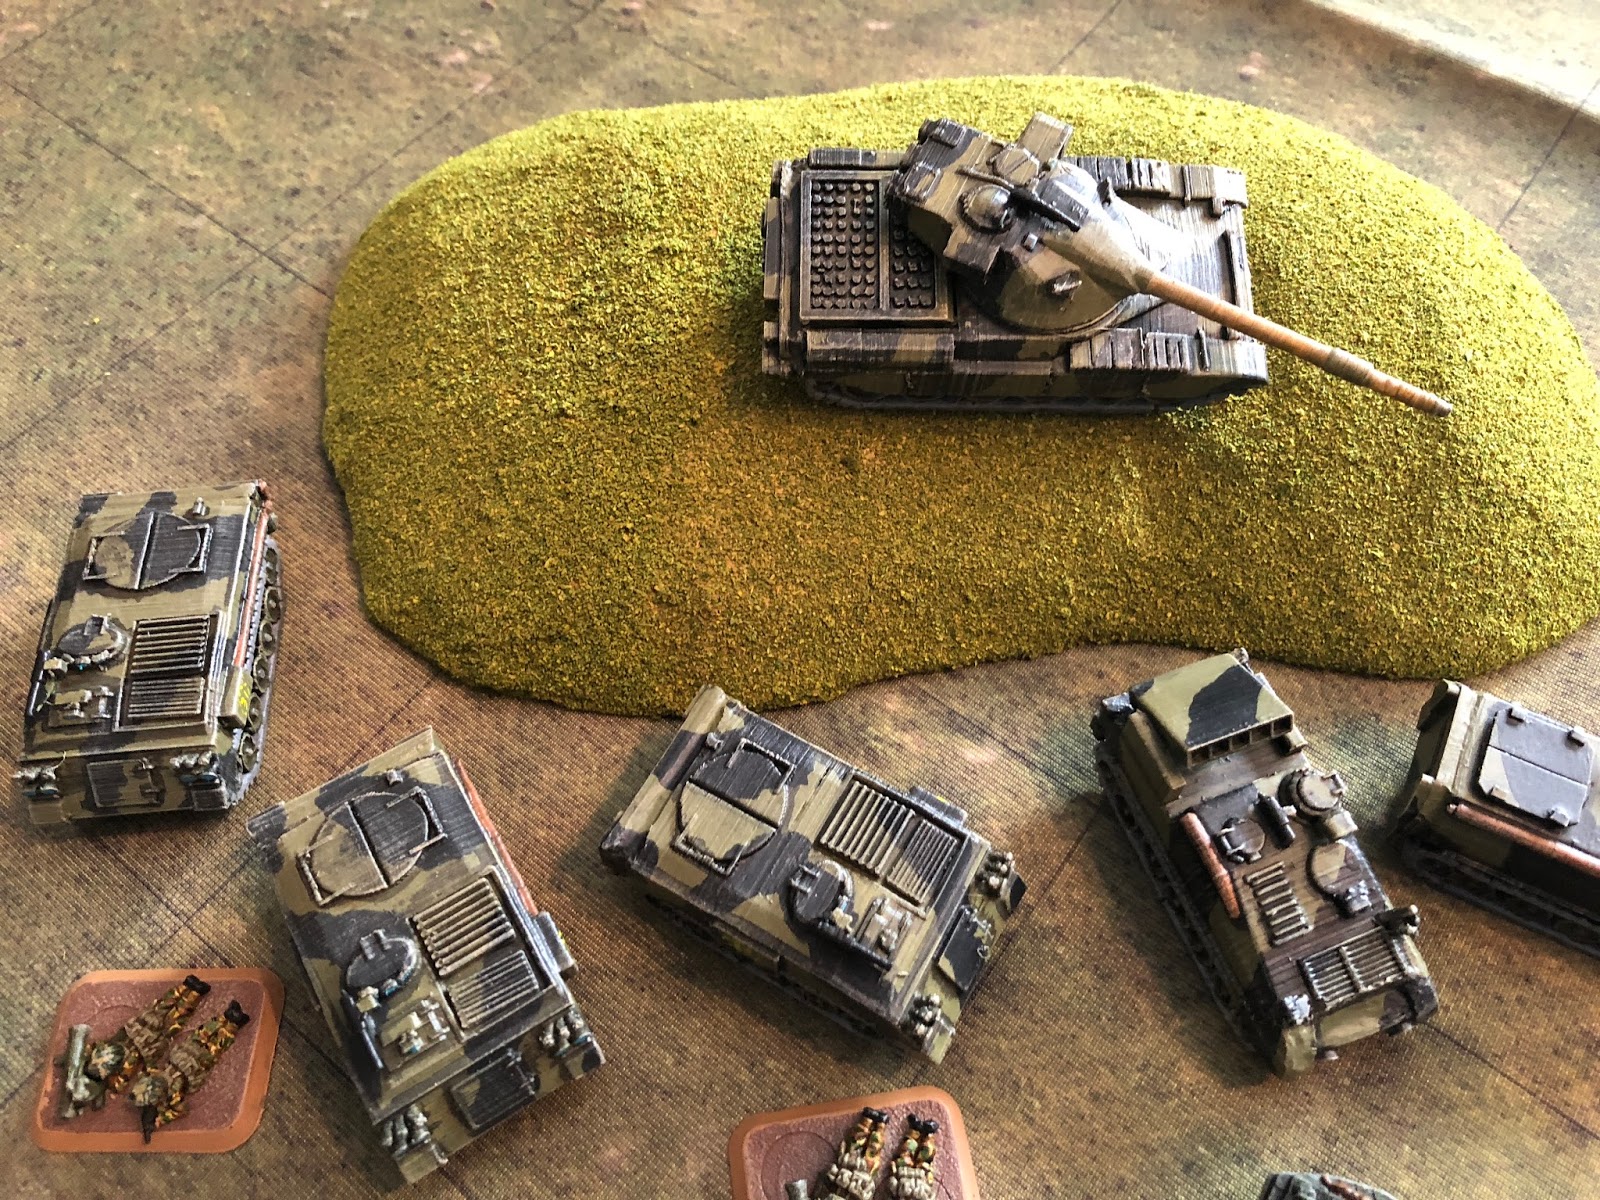 Green Tank Cannon Model Miniature 3D Toys Hobbies Kids Educational esV PDO 